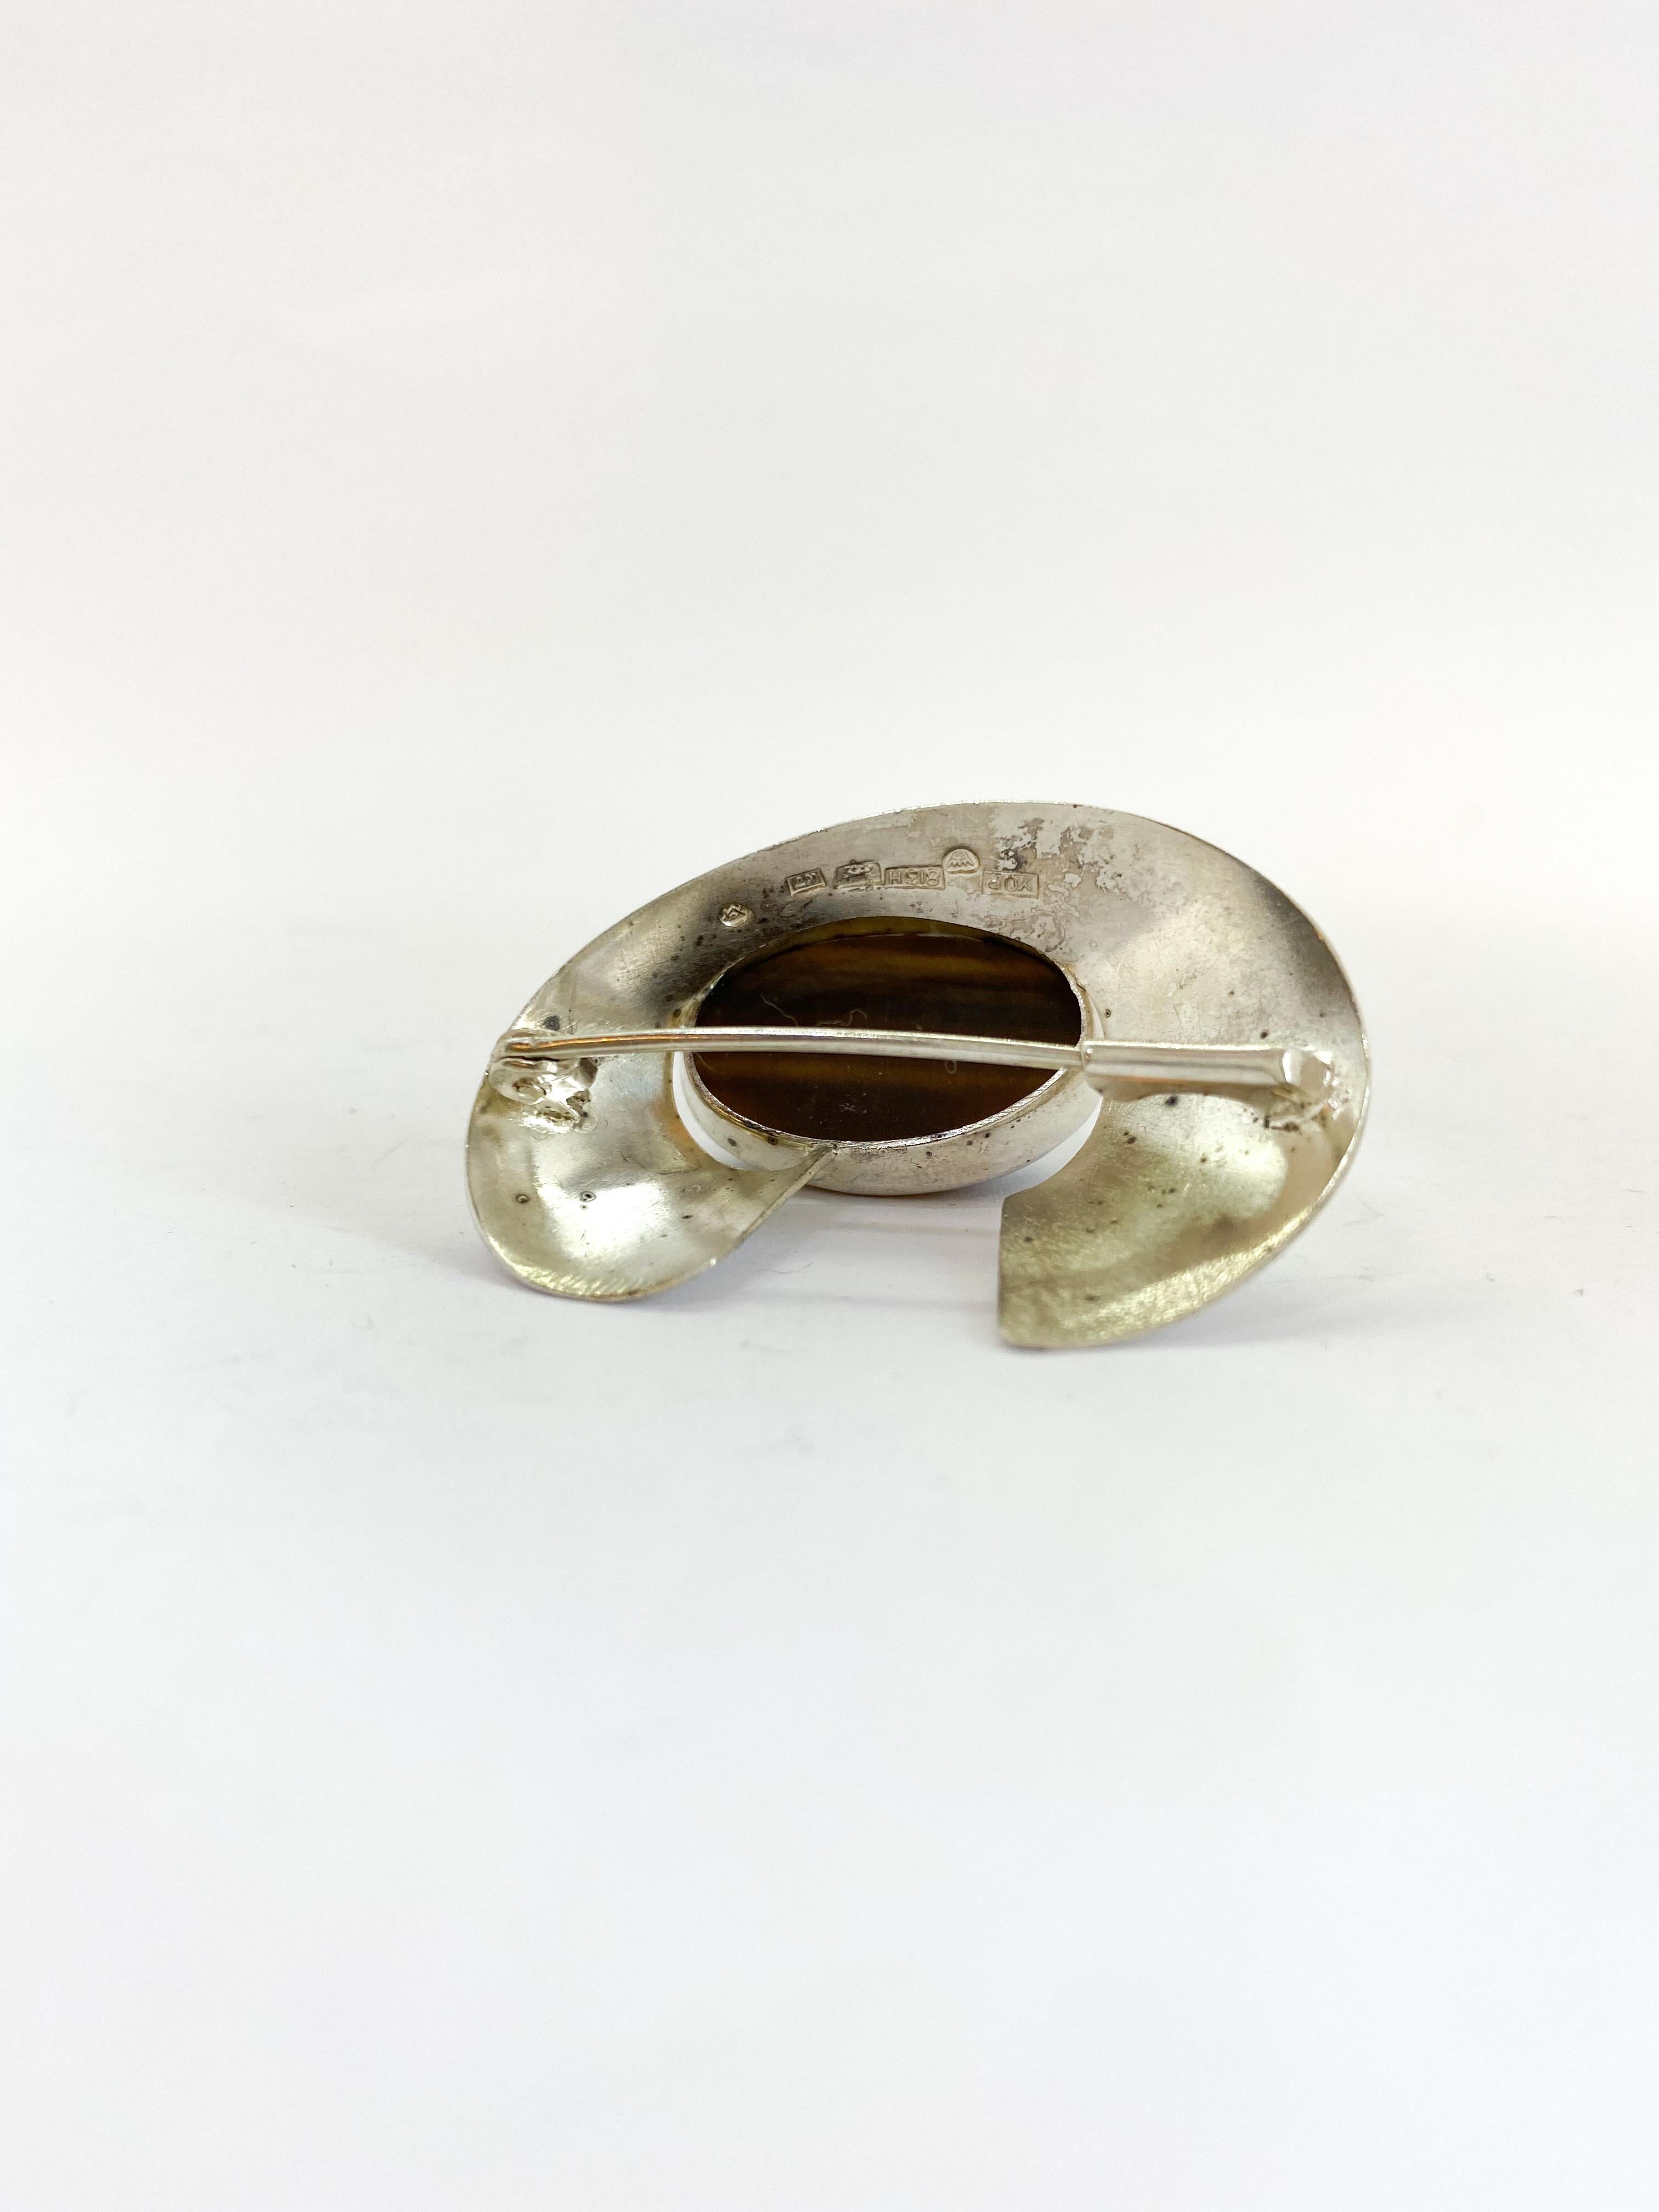 Round Cut Silver Brooch Tiger Eye Stone Made in Finland, 1963